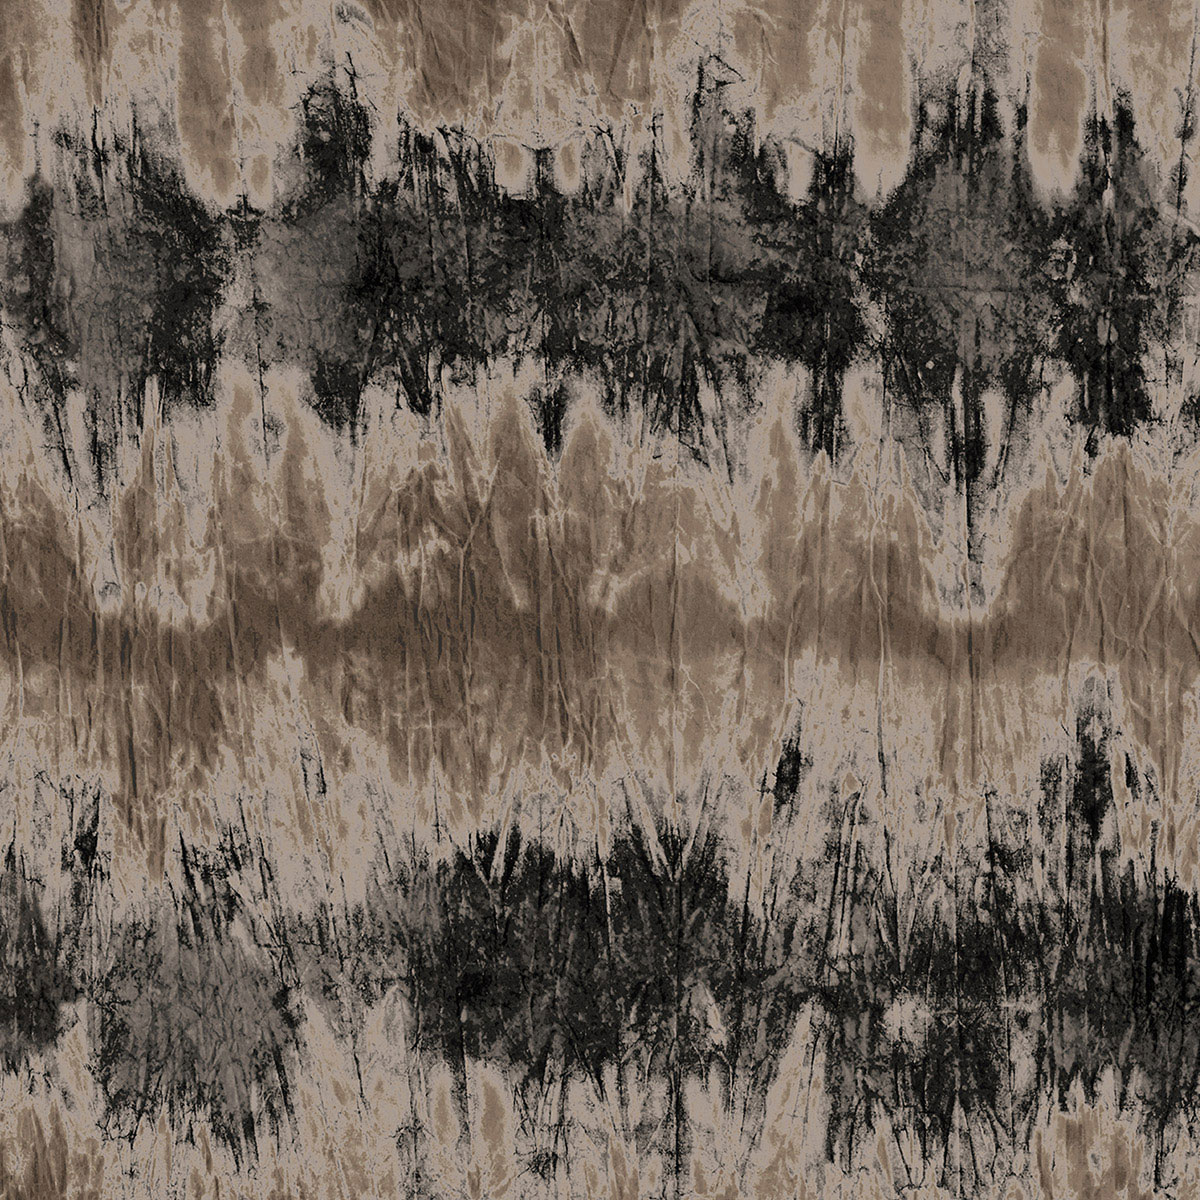 5B-Resonance-Terre-fumee-Detail-Laur-Meyrieux-papierpeint-wallpaper